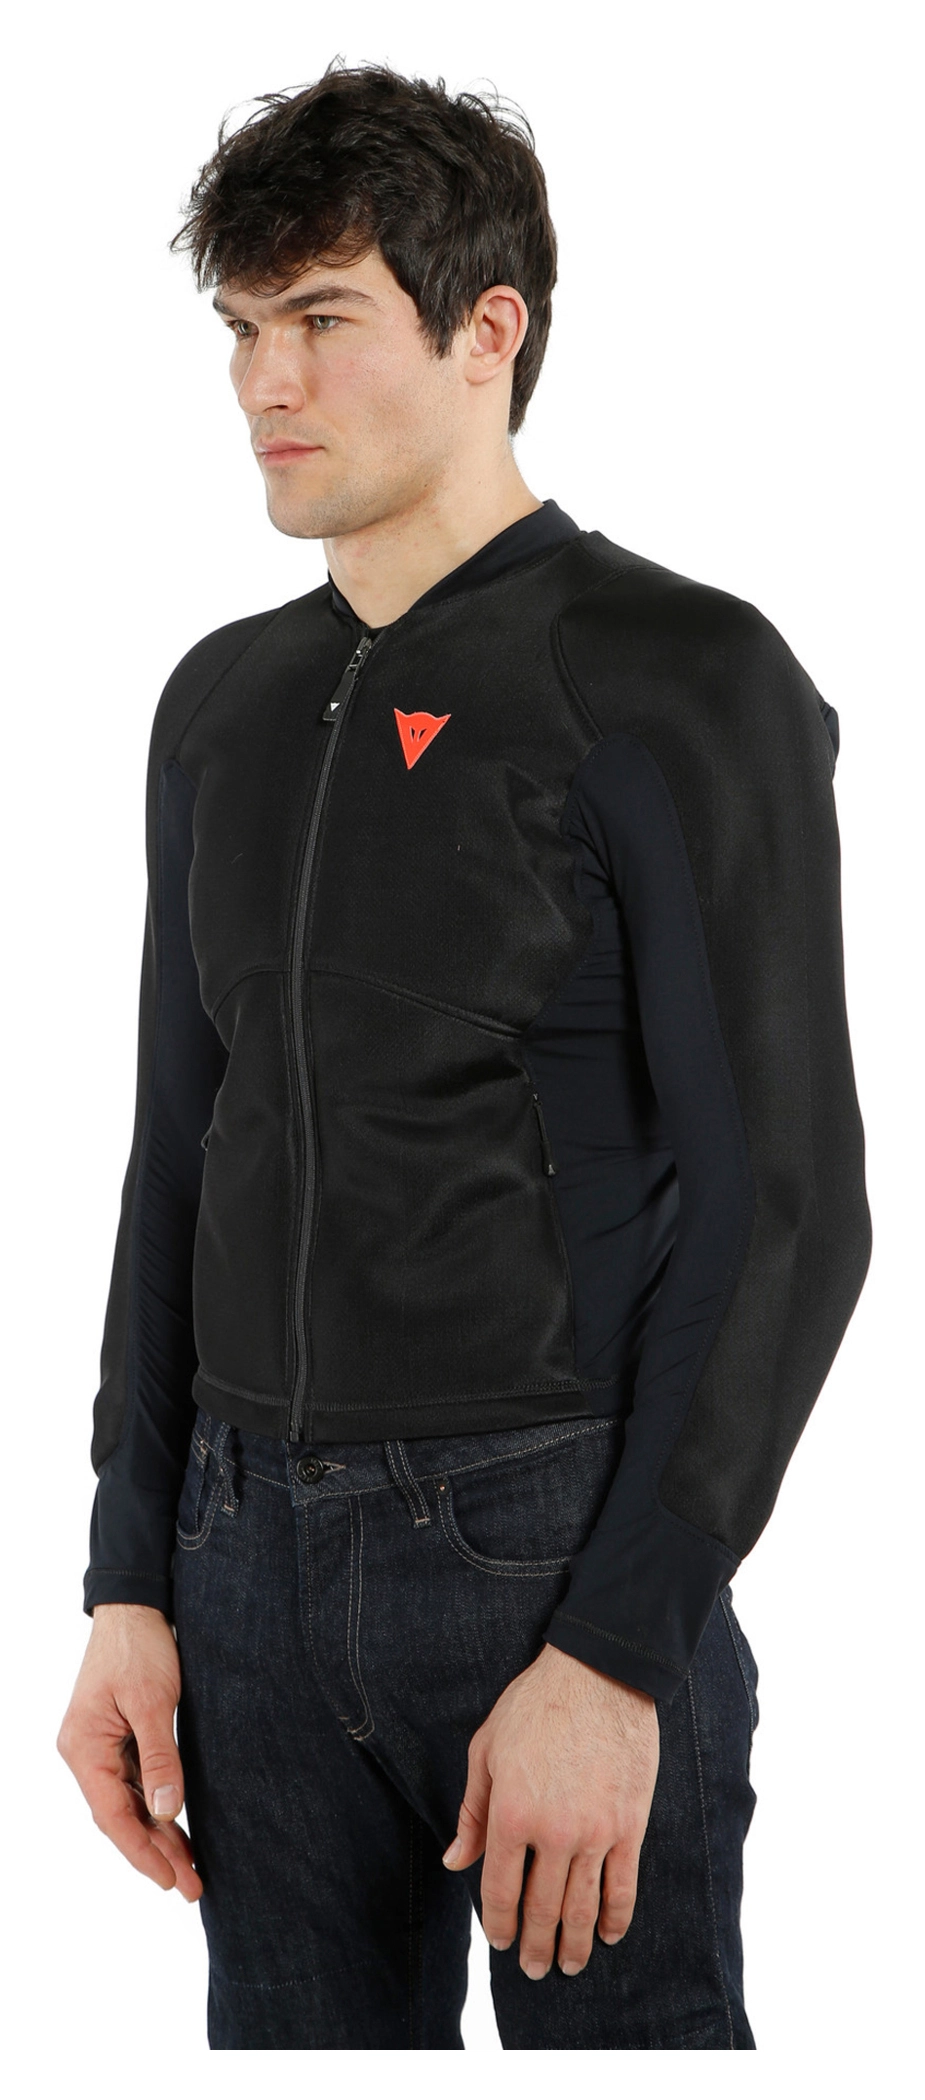 Dainese Pro Armor 2 Jacket  46% ($119.96) Off! - RevZilla